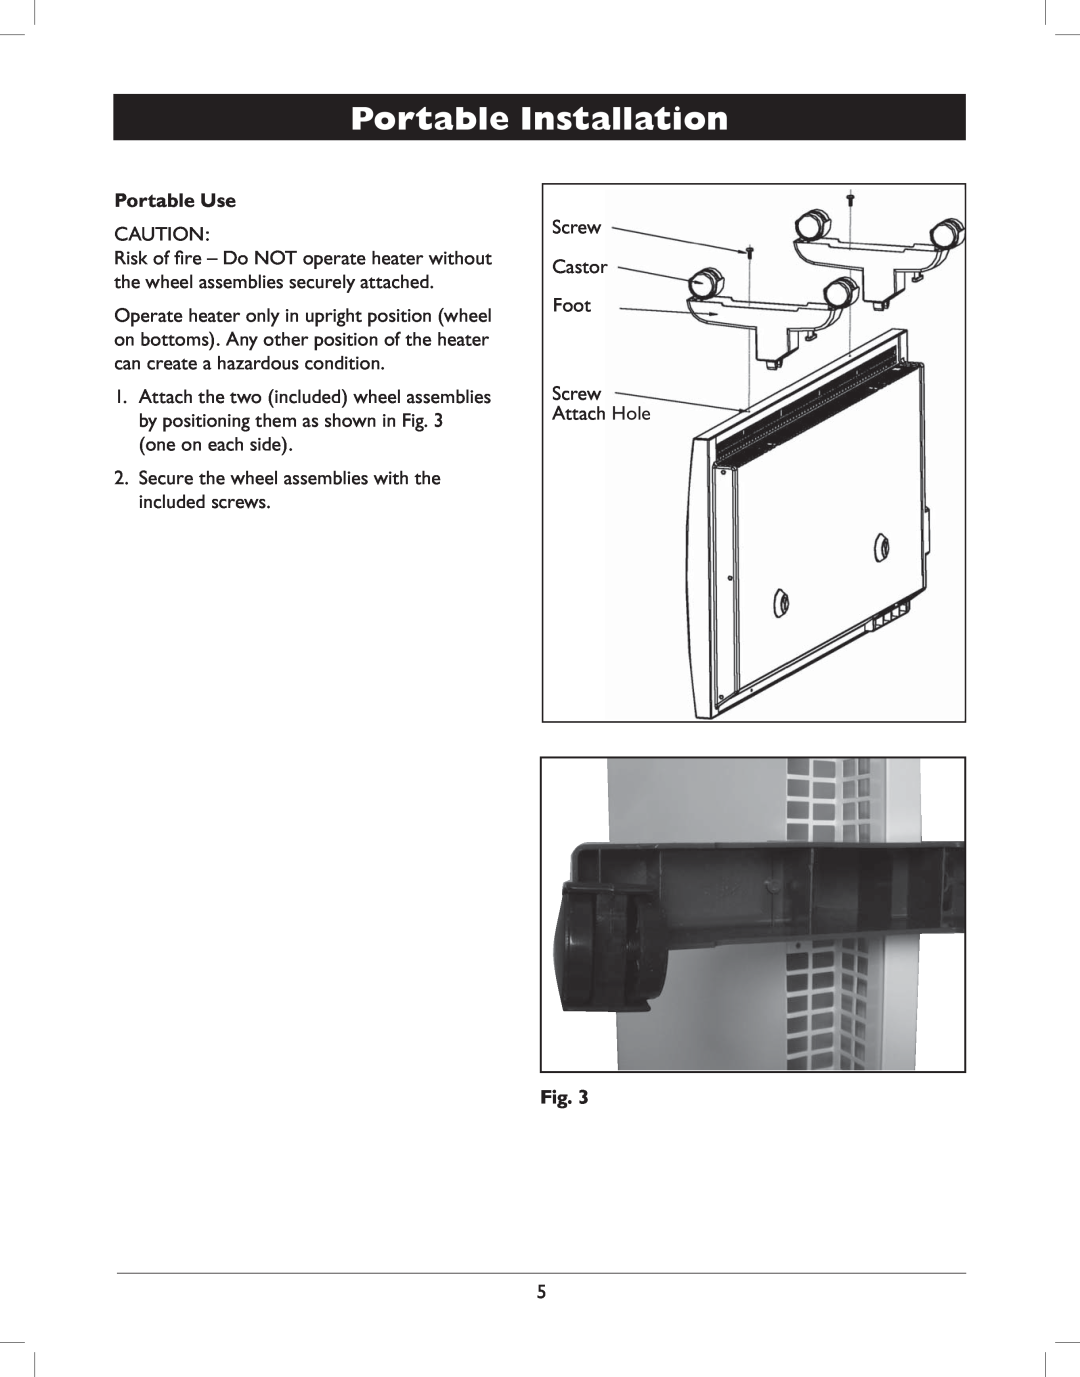 Amcor AMH8 owner manual Portable Installation, Portable Use 